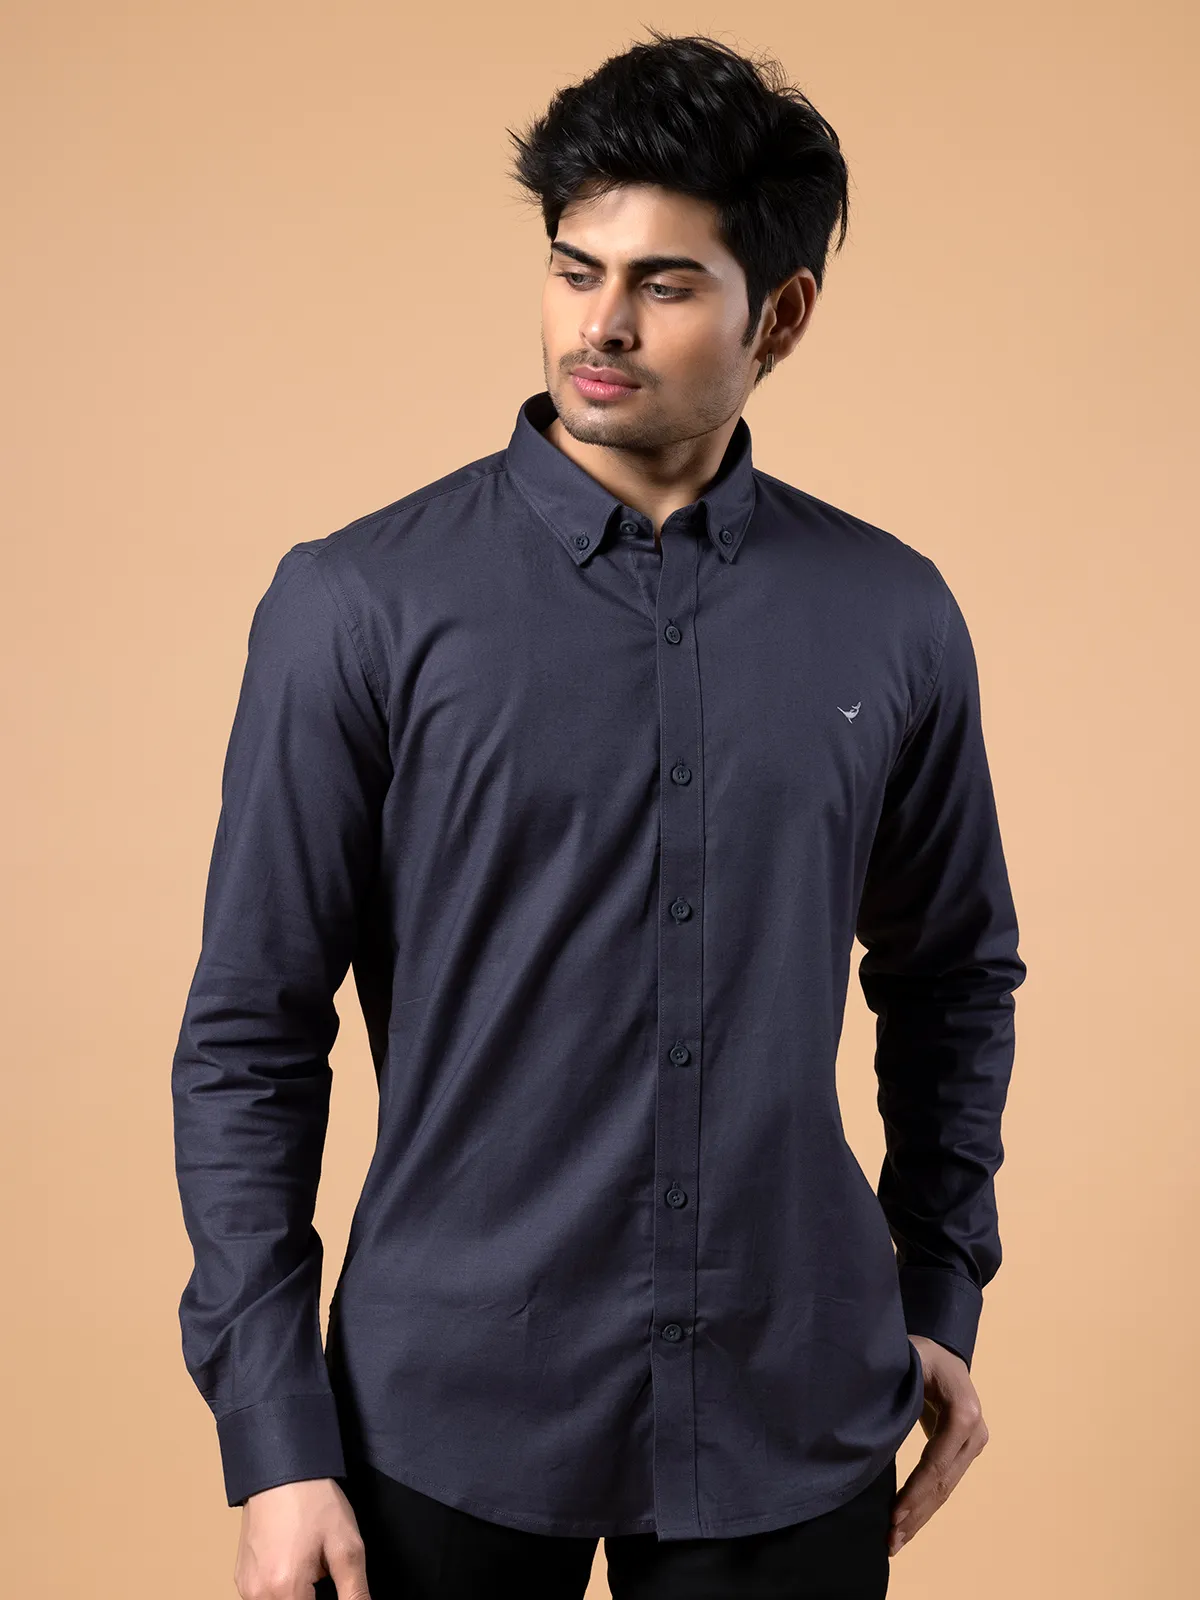 Frio plain dark grey cotton casual slim fit shirt